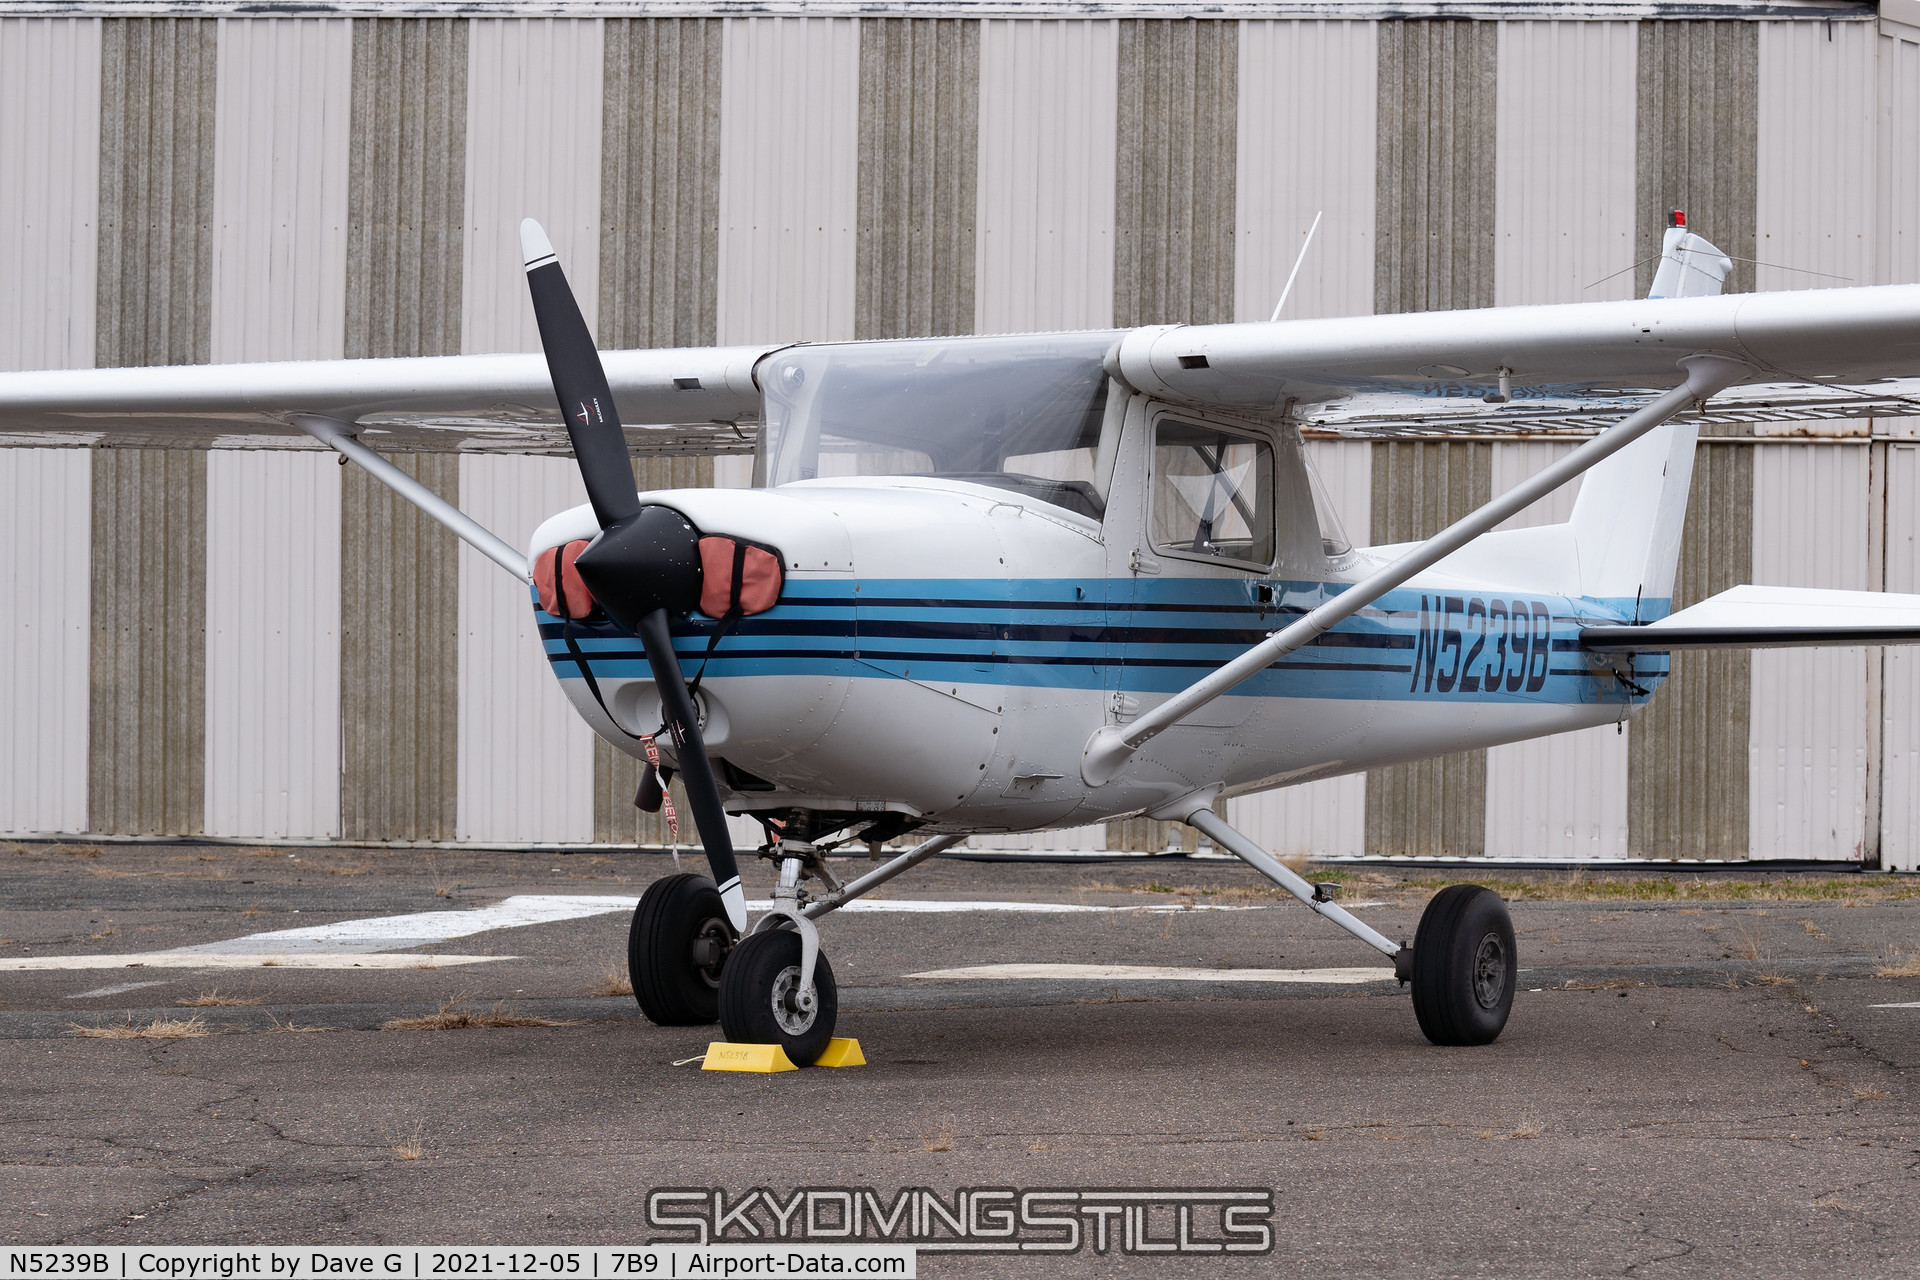 N5239B, 1980 Cessna 152 C/N 15284366, Parked at Ellington, CT